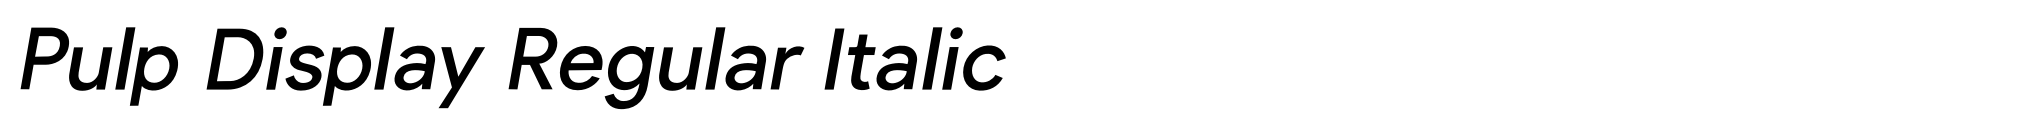 Pulp Display Regular Italic image